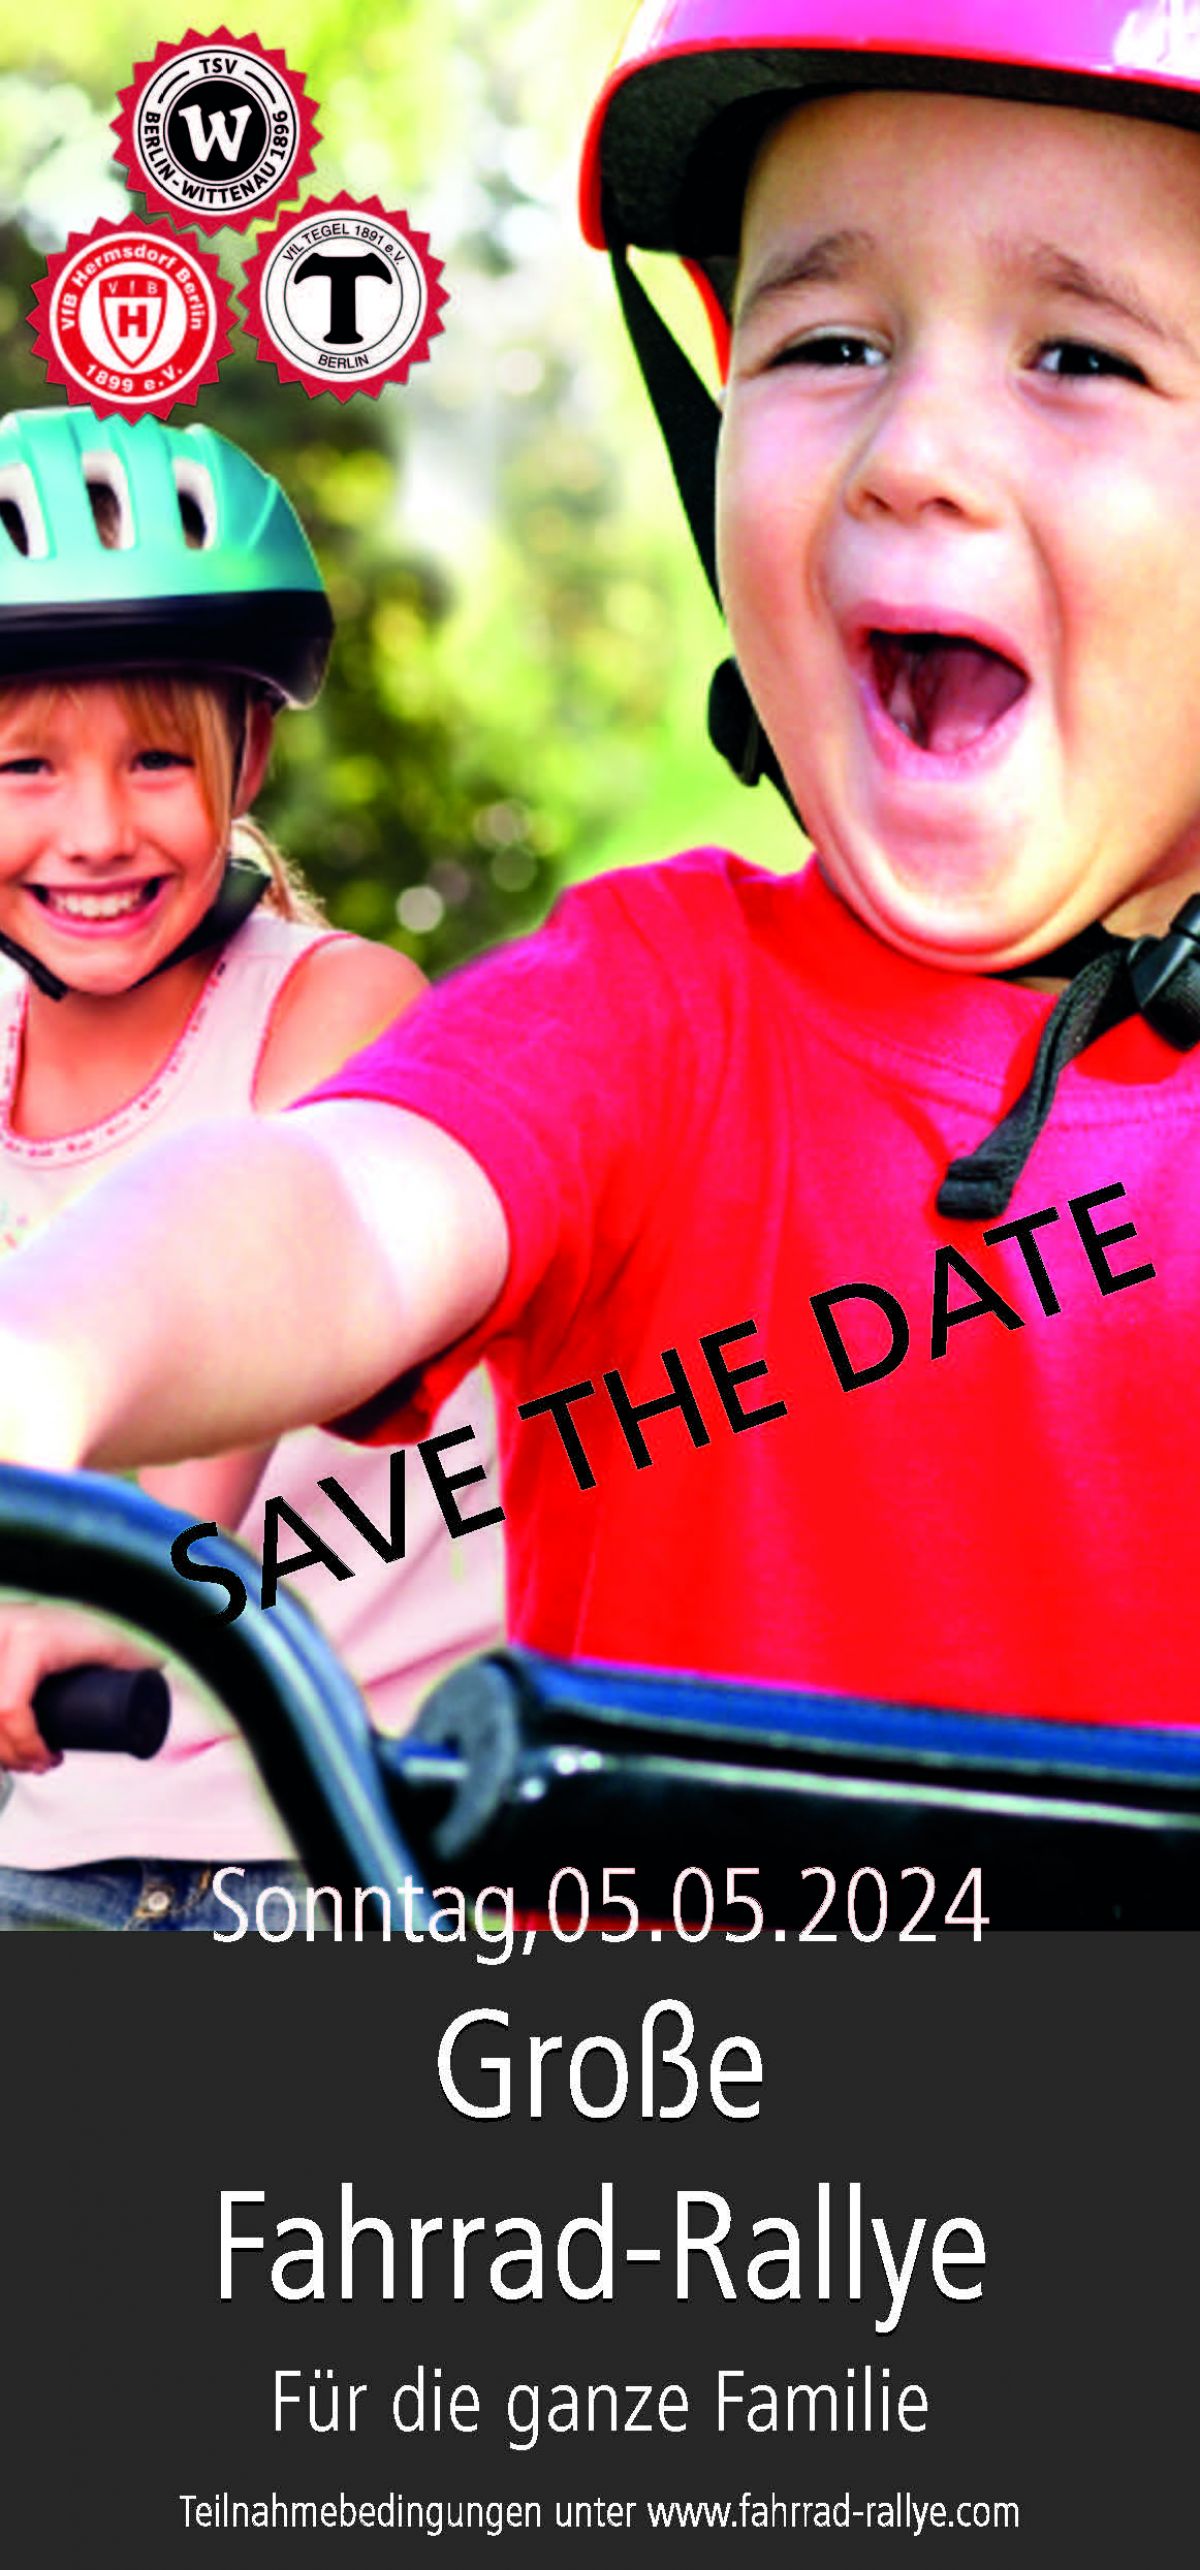 Save the Date: Fahrrad-Rallye 2024